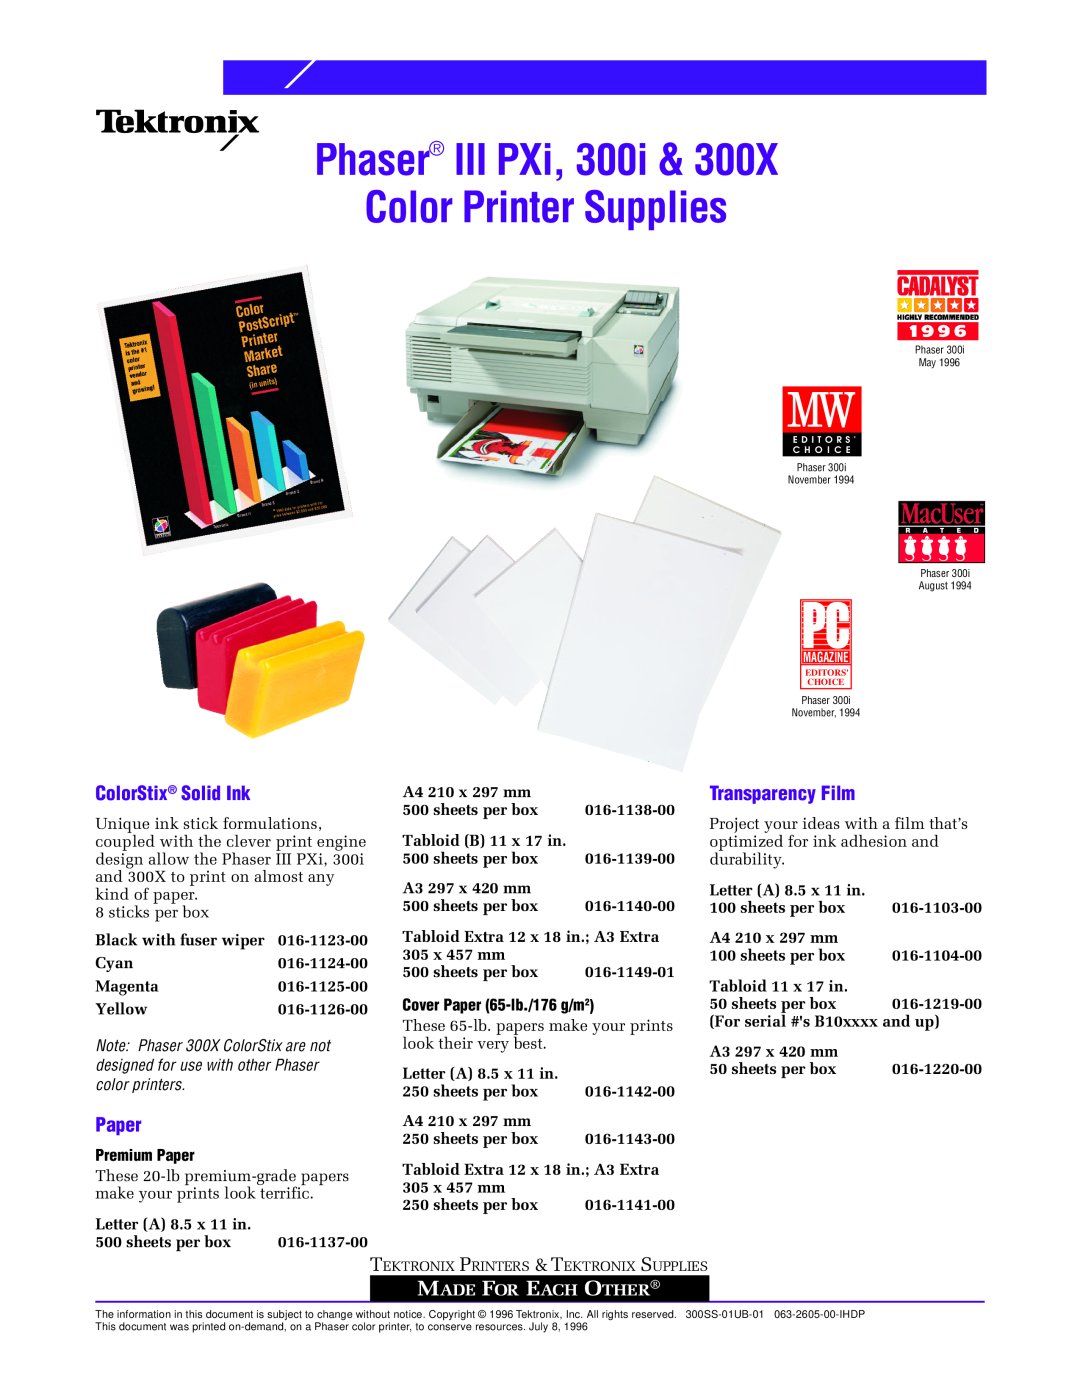 Tektronix 4680FP1, 4680FP2 manual ColorStix Solid Ink, Transparency Film, Premium Paper, Cover Paper 65-lb./176 g/m2 